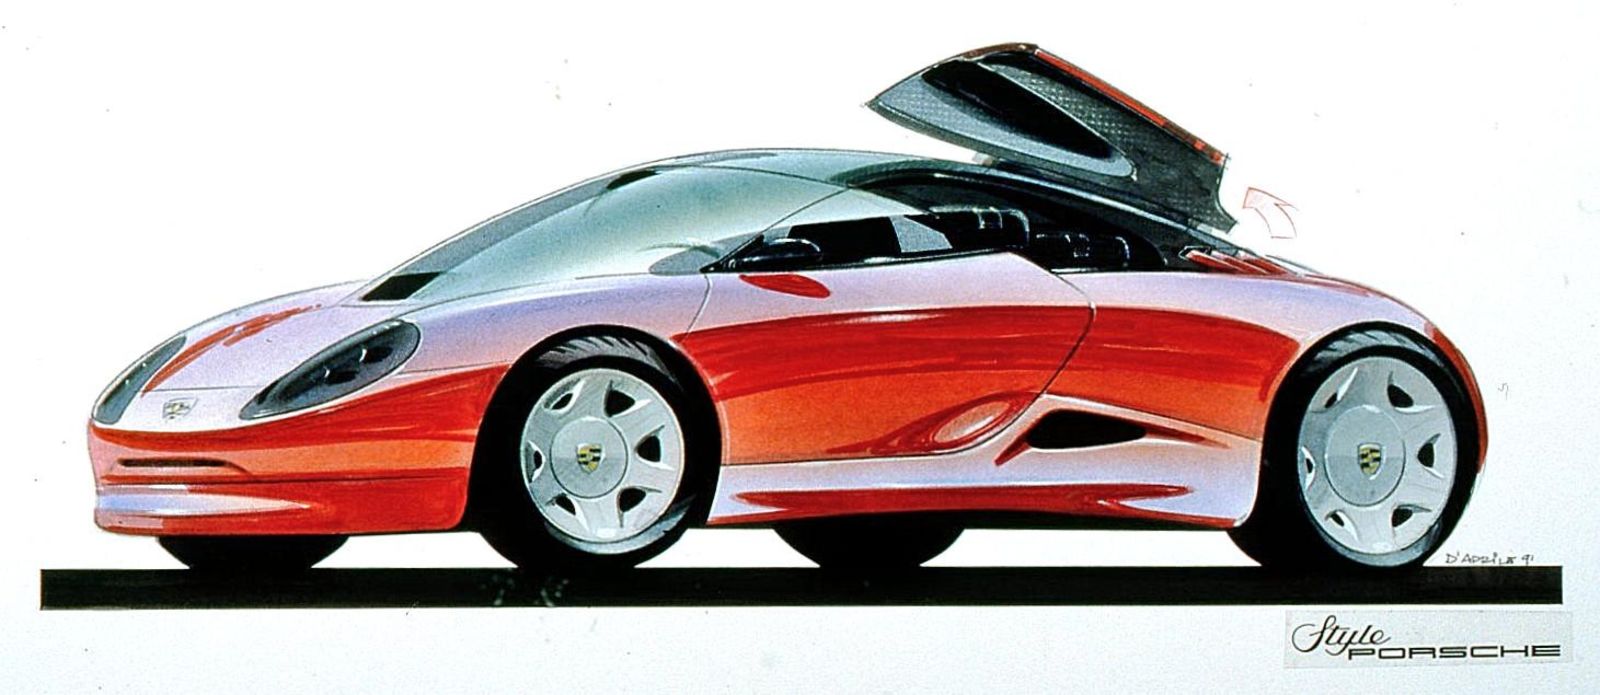 Illustration for article titled Porsche Design Study 1991